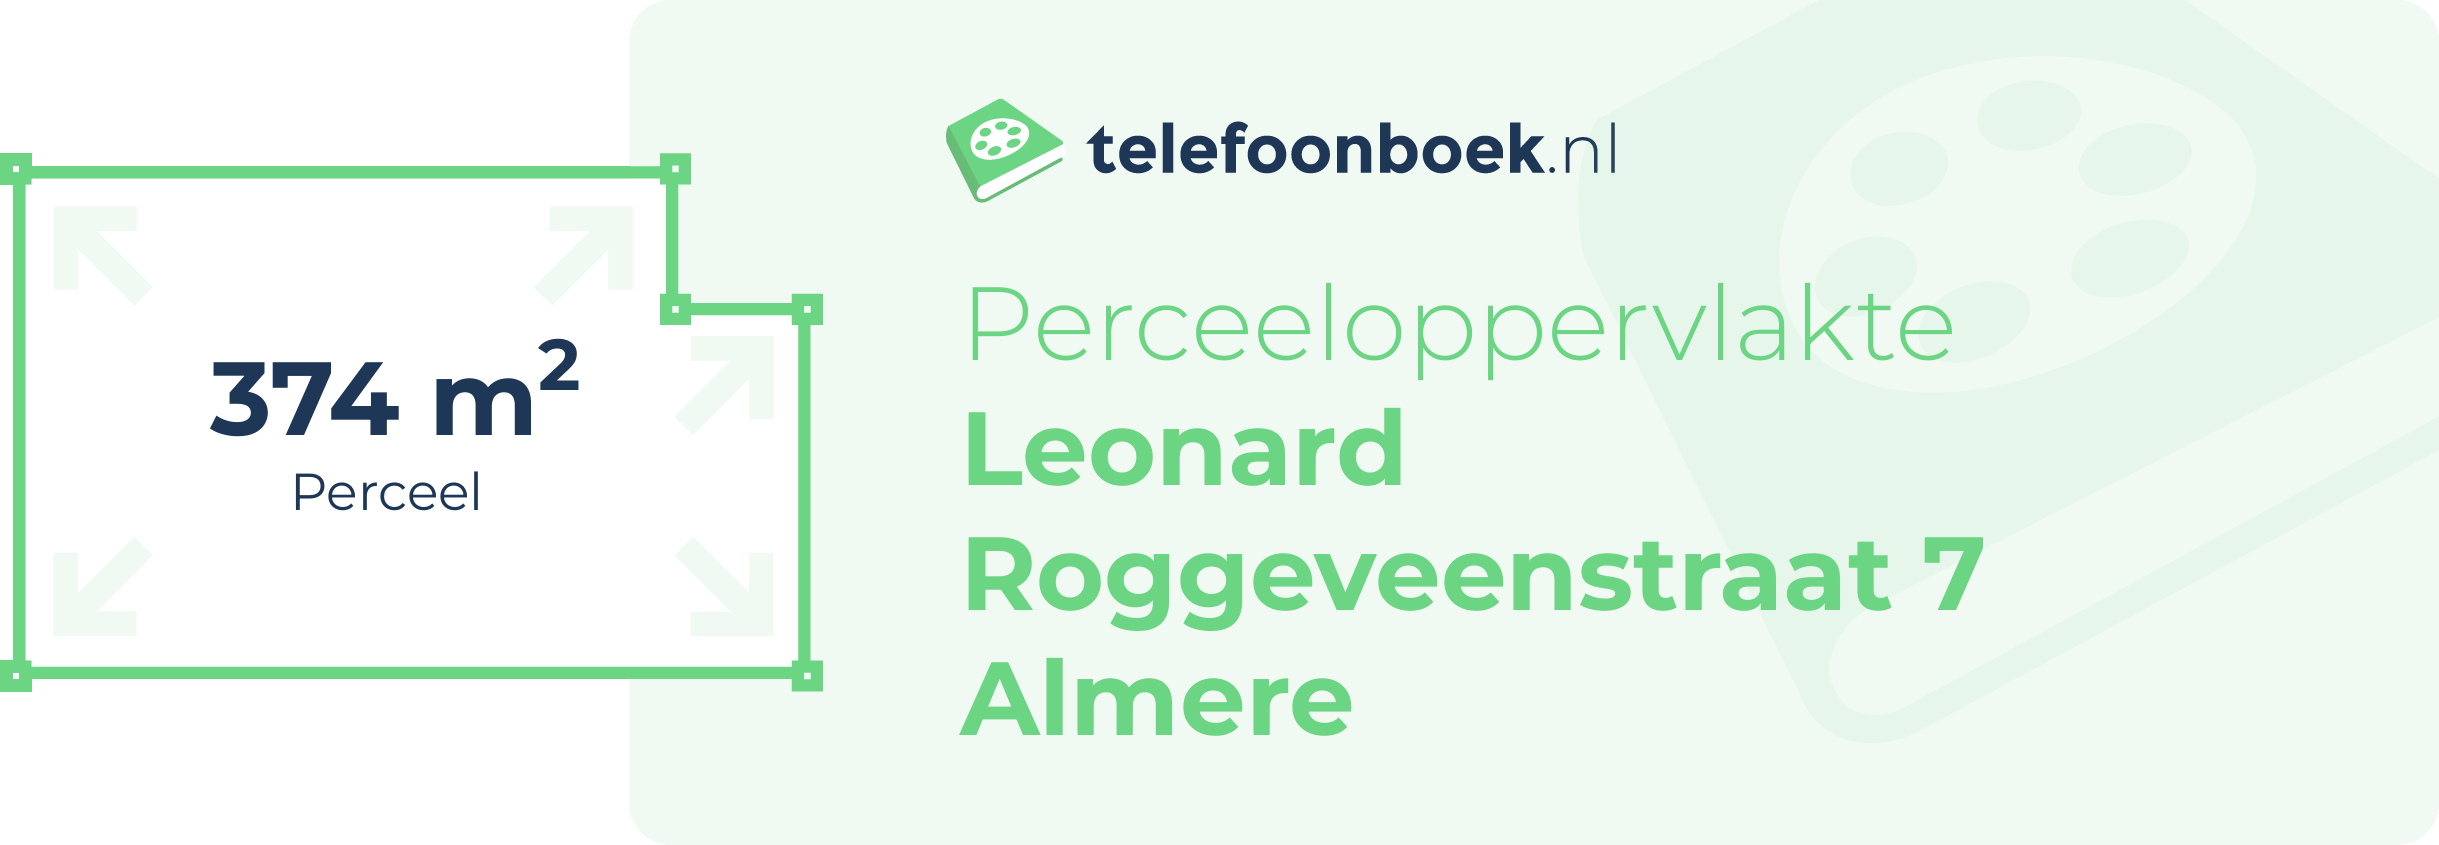 Perceeloppervlakte Leonard Roggeveenstraat 7 Almere